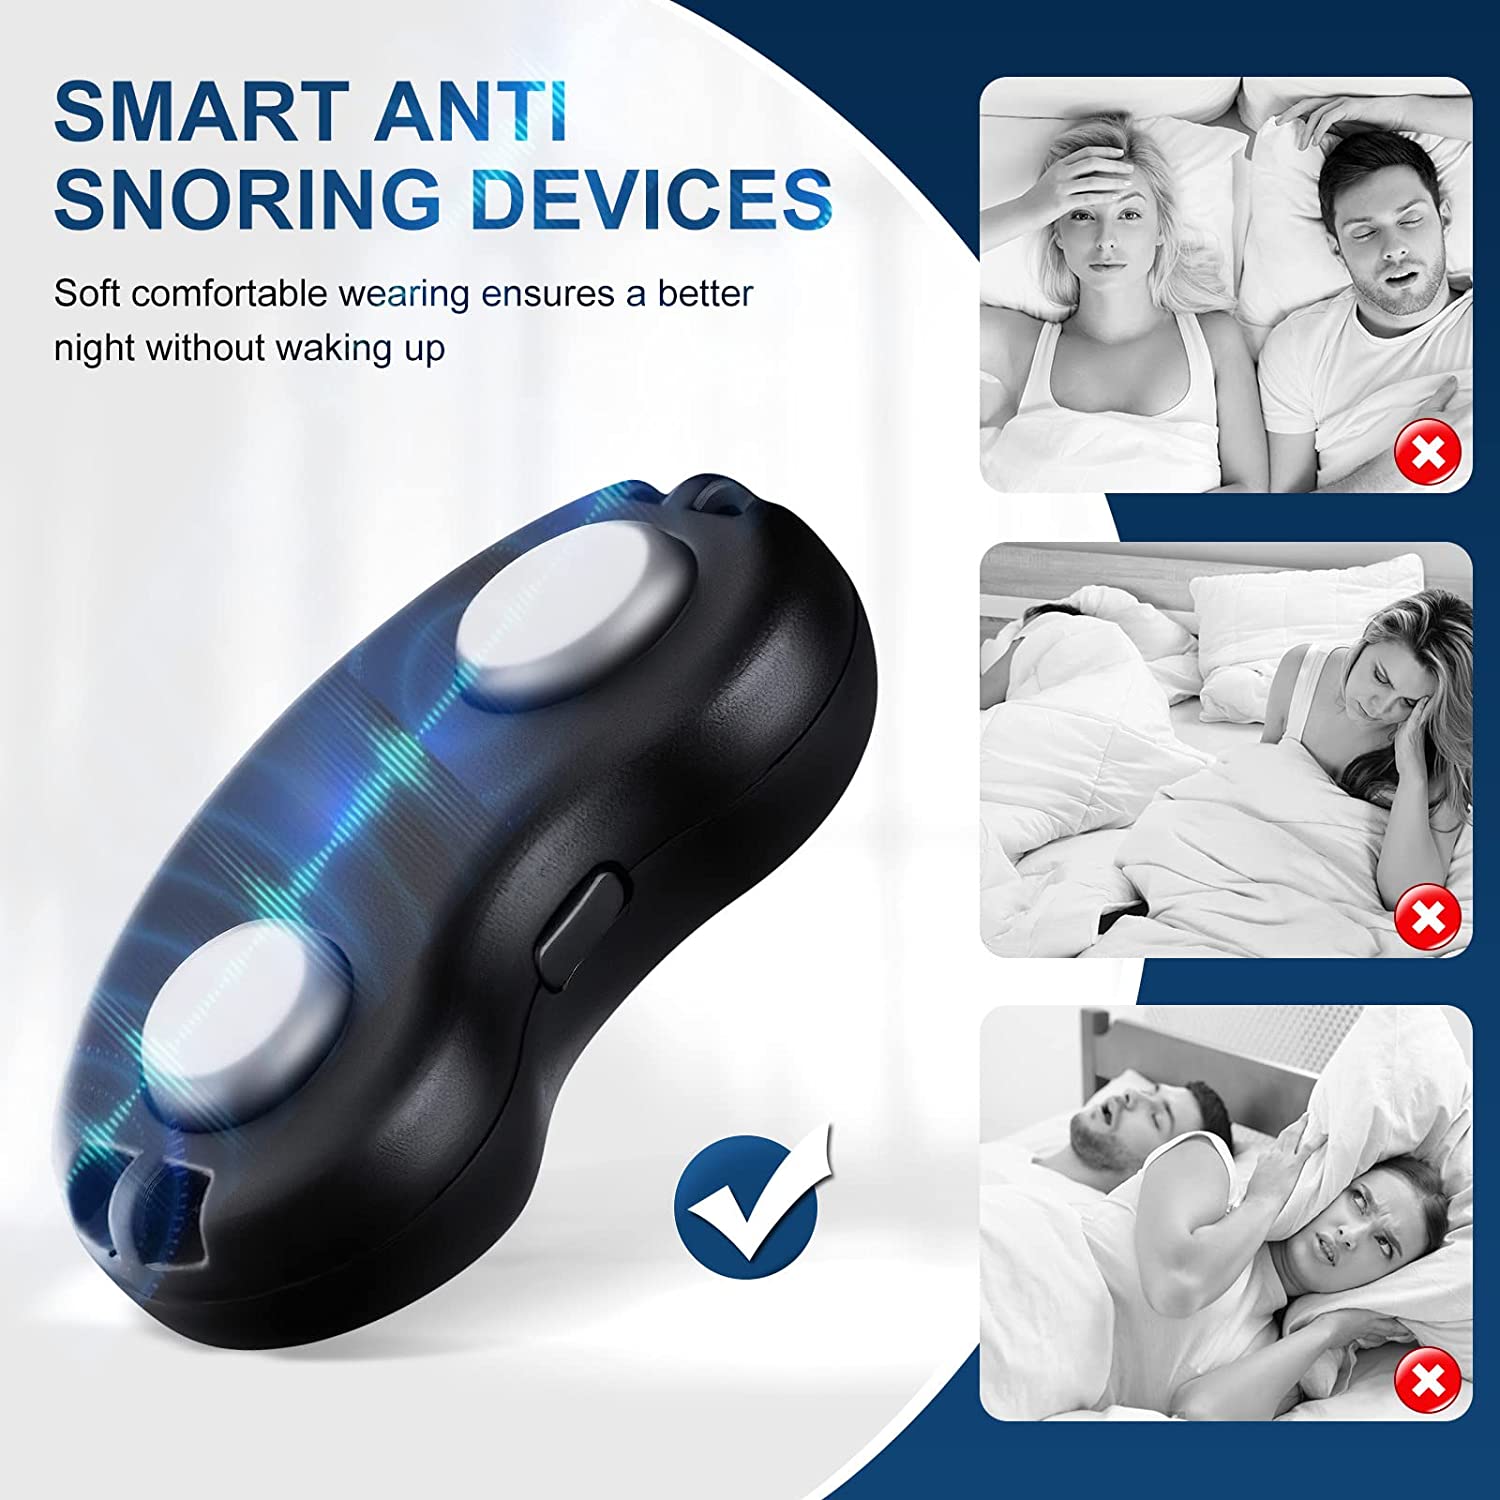 Smart Anti Snoring Device3